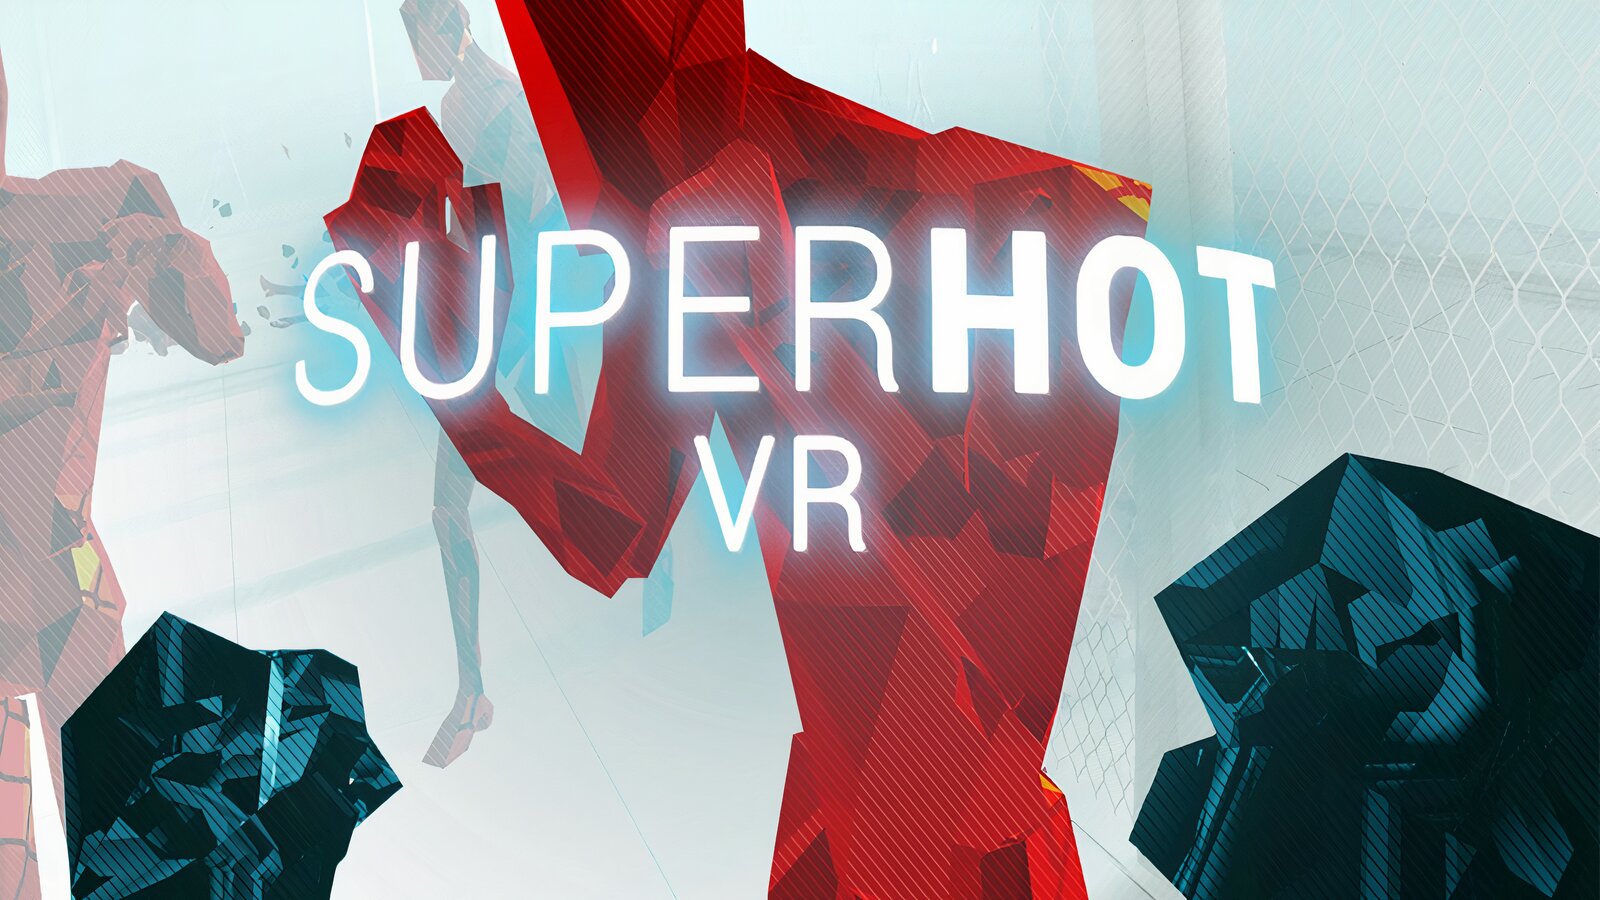 SuperHot VR